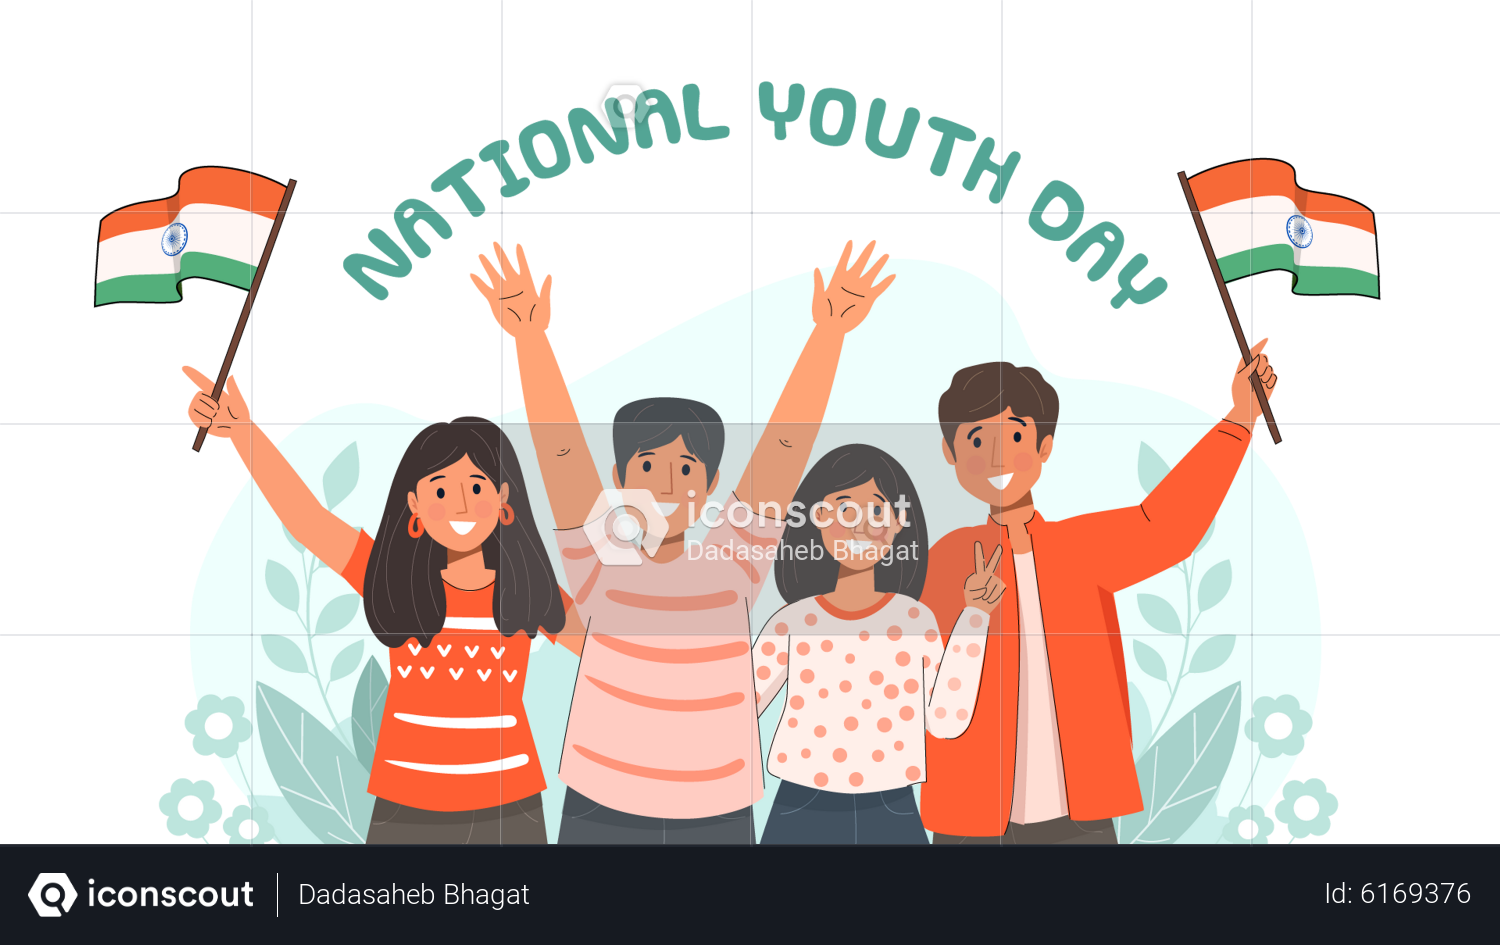 Why Swami Vivekananda Jayanti Celebrate As National Youth Day?